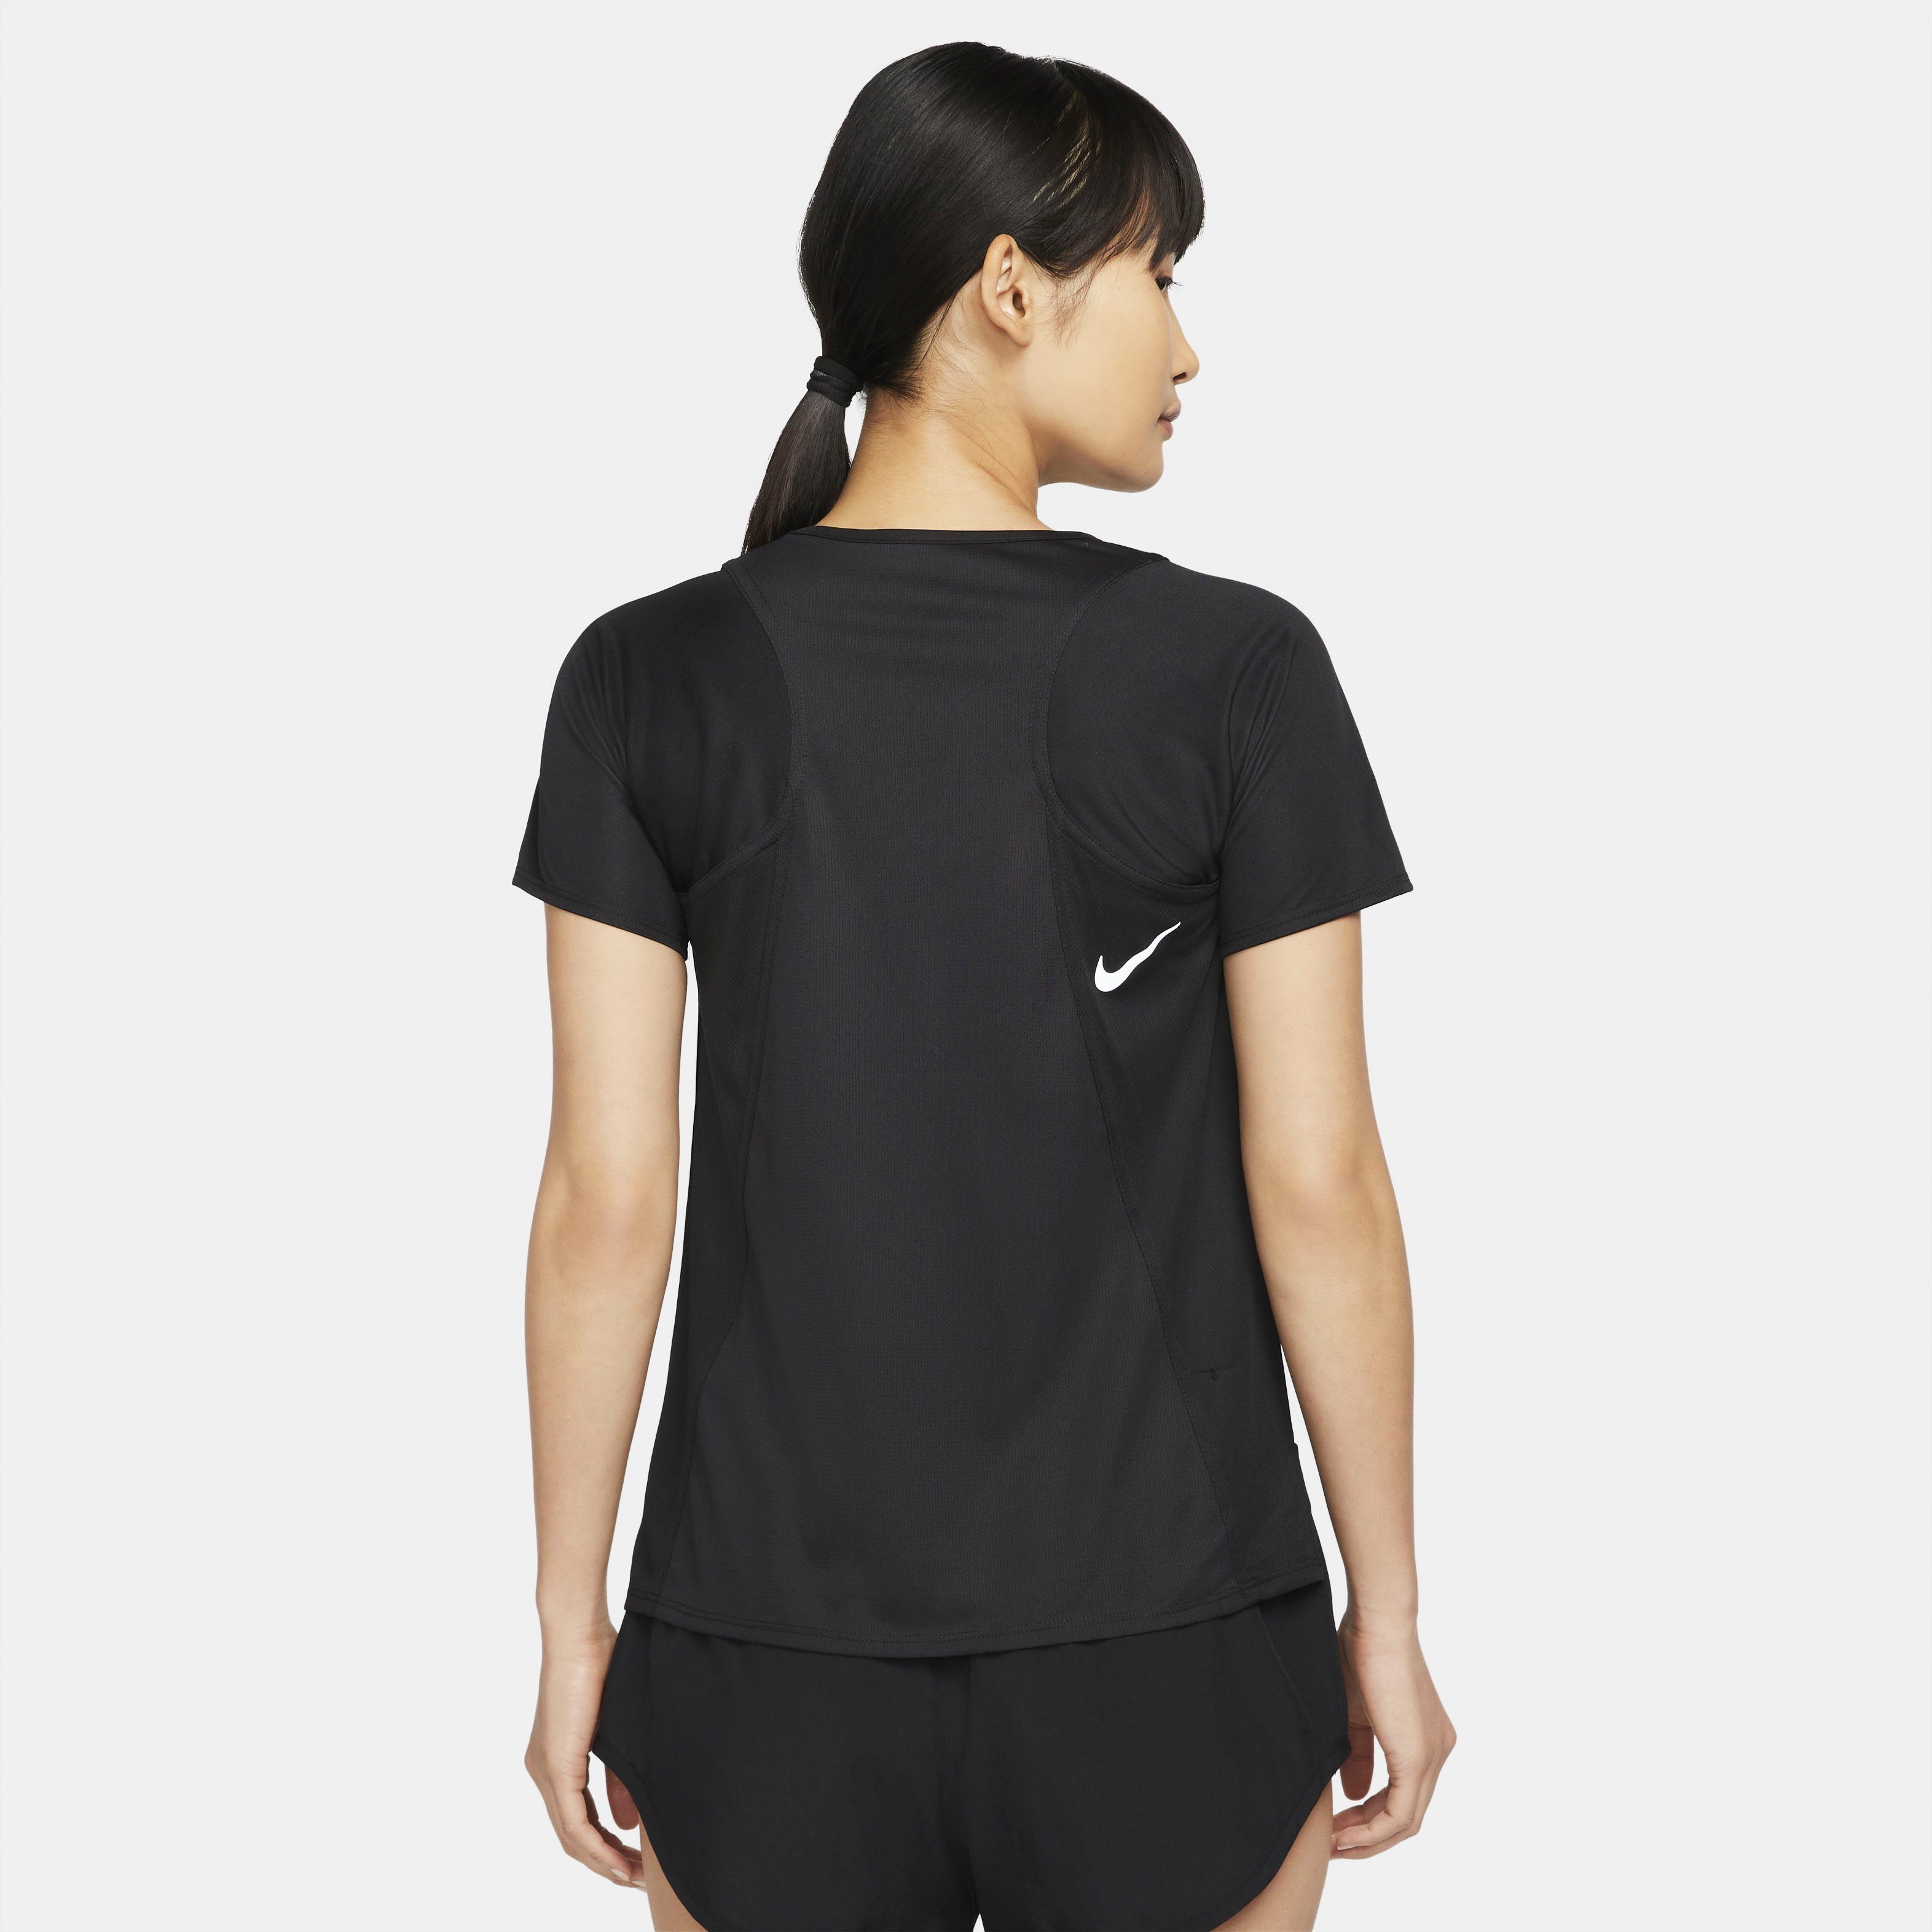 SILV DRI-FIT WOMEN'S BLACK/REFLECTIVE RUNNING TOP RACE Laufshirt SHORT-SLEEVE Nike